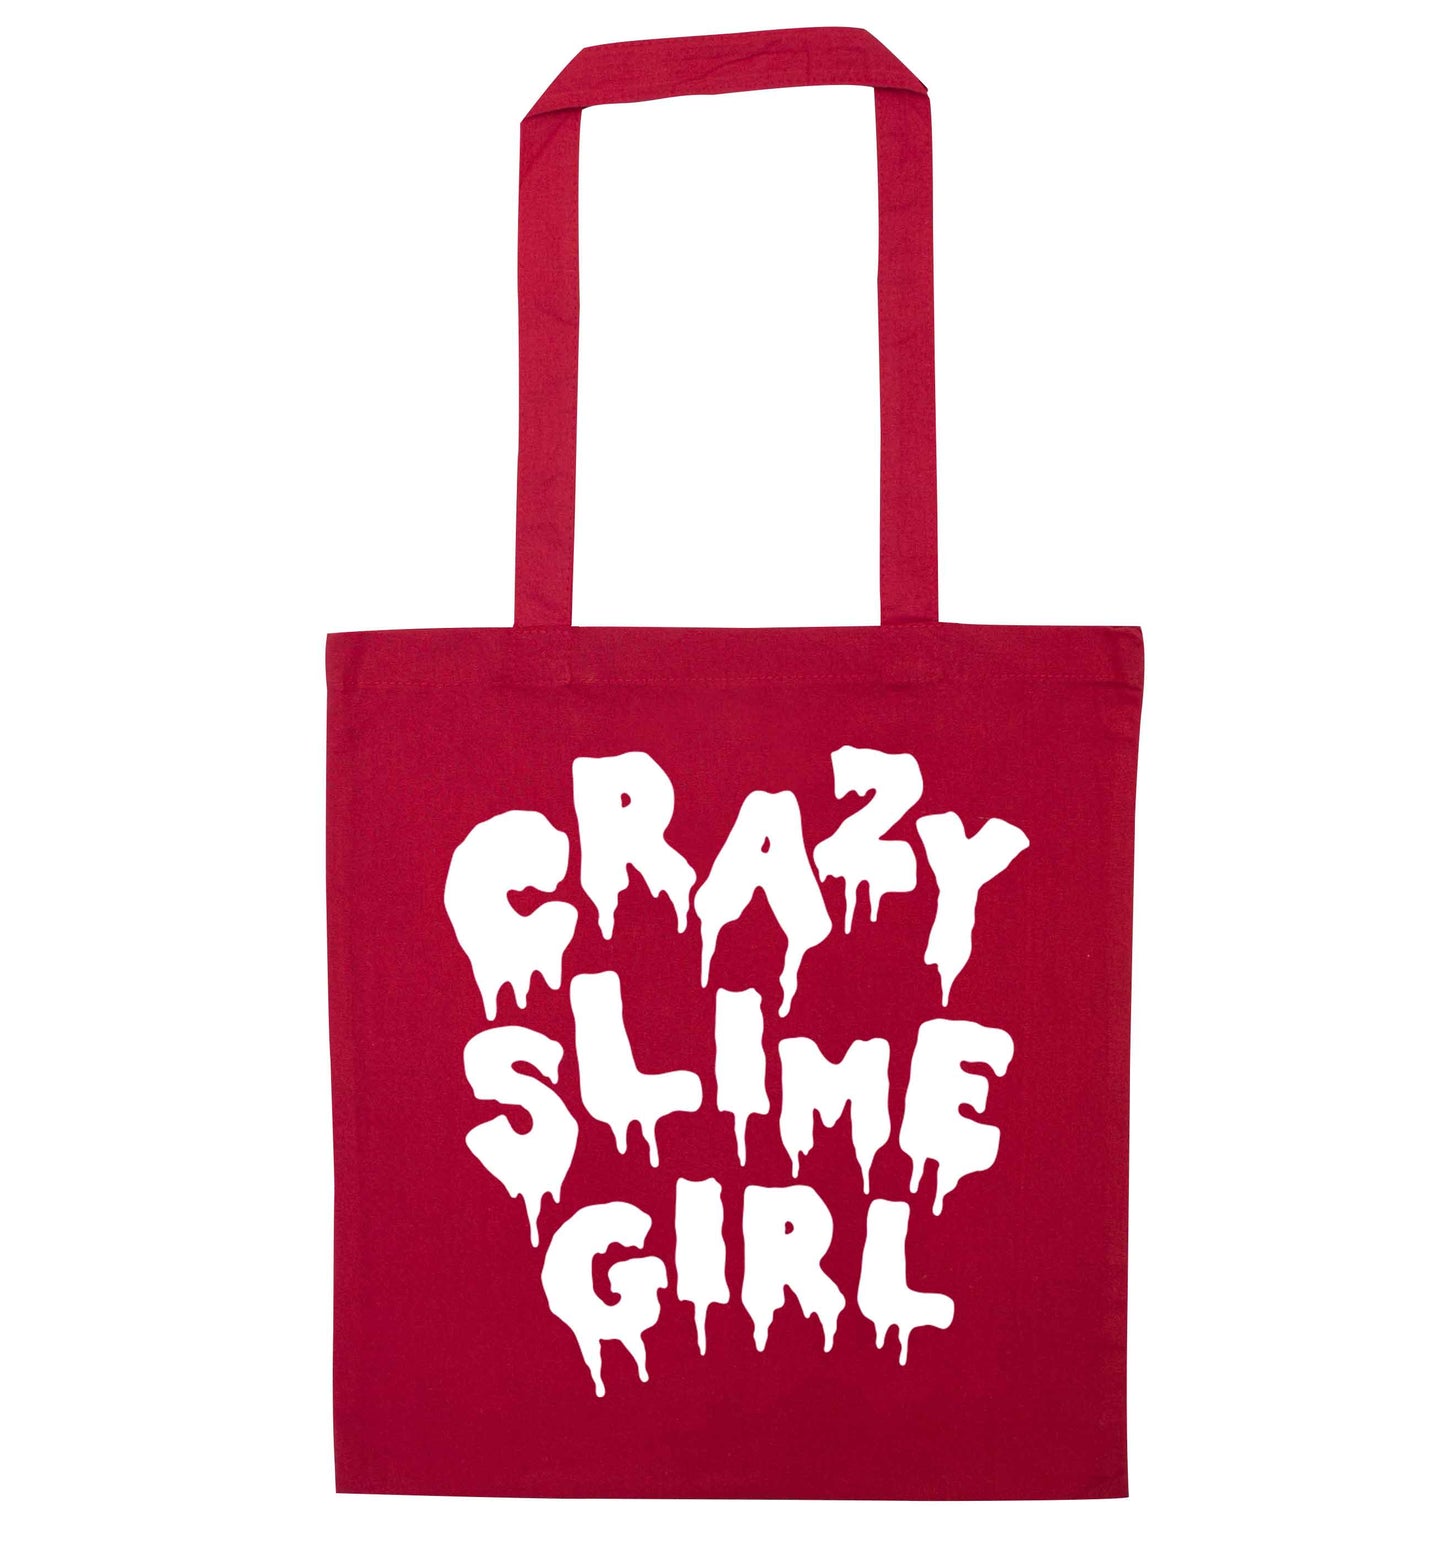 Crazy slime girl red tote bag